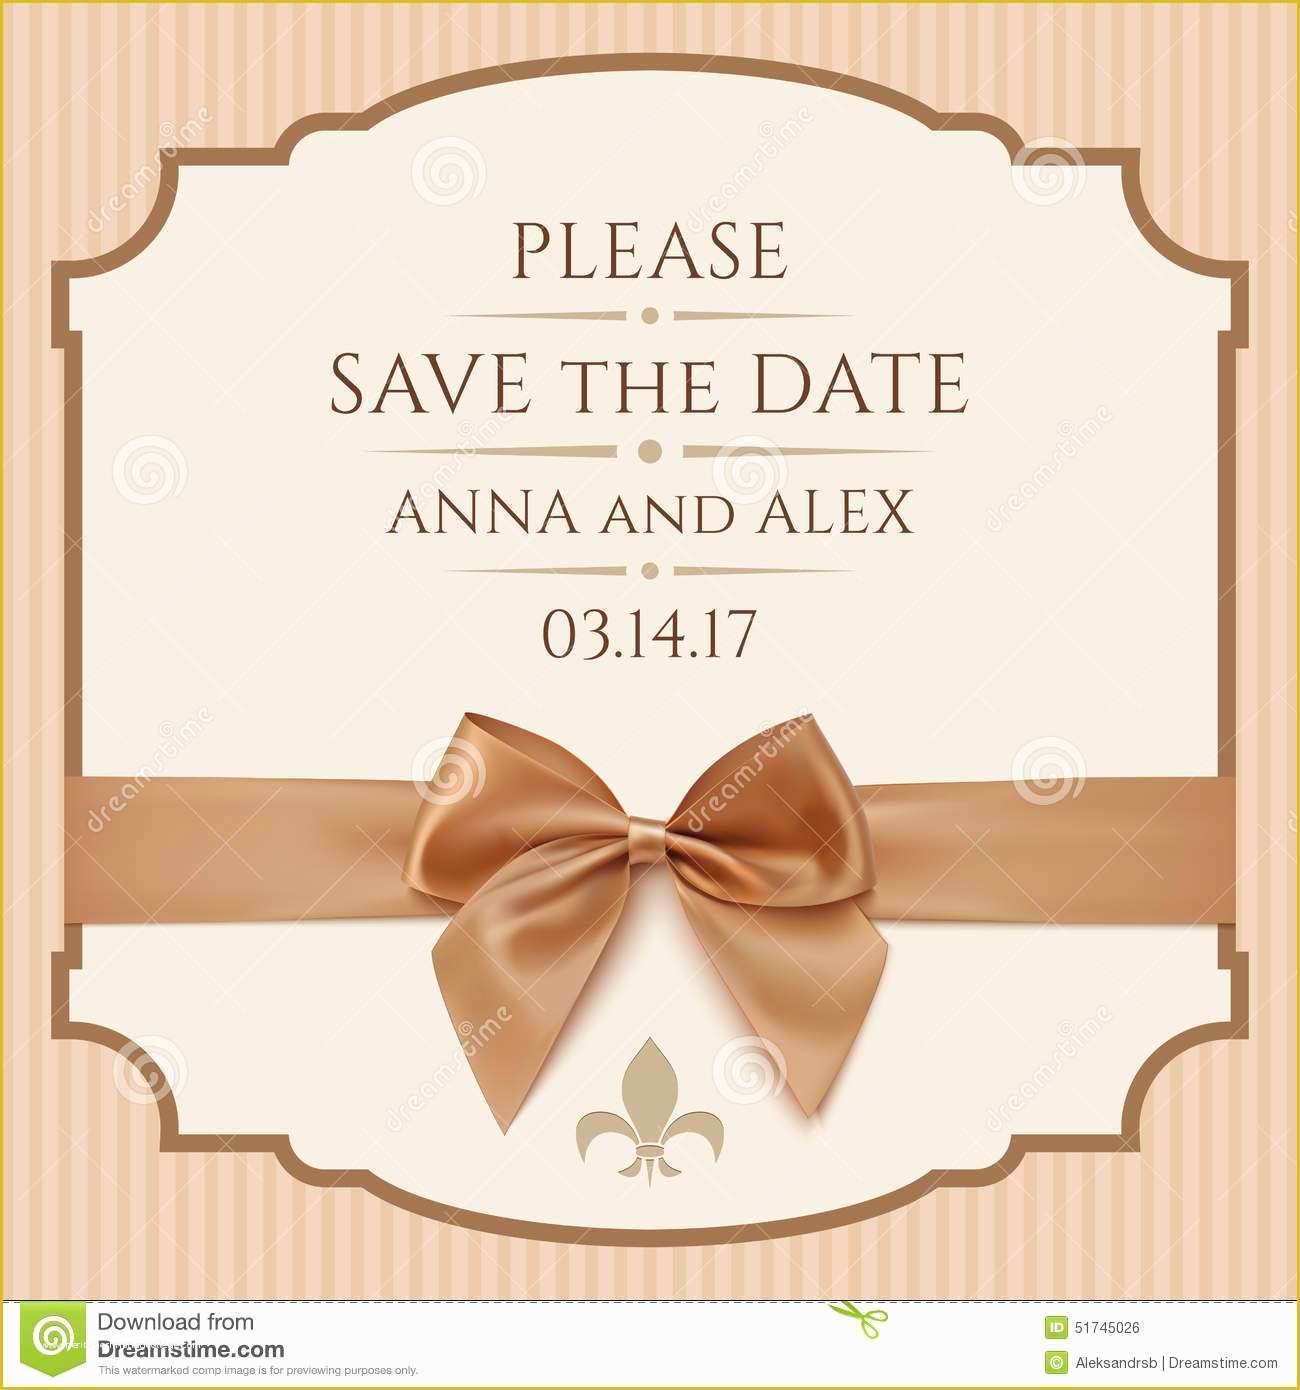 Free Save the Date Wedding Invitation Templates Of Save the Date Wedding Invitation Card Stock Illustration